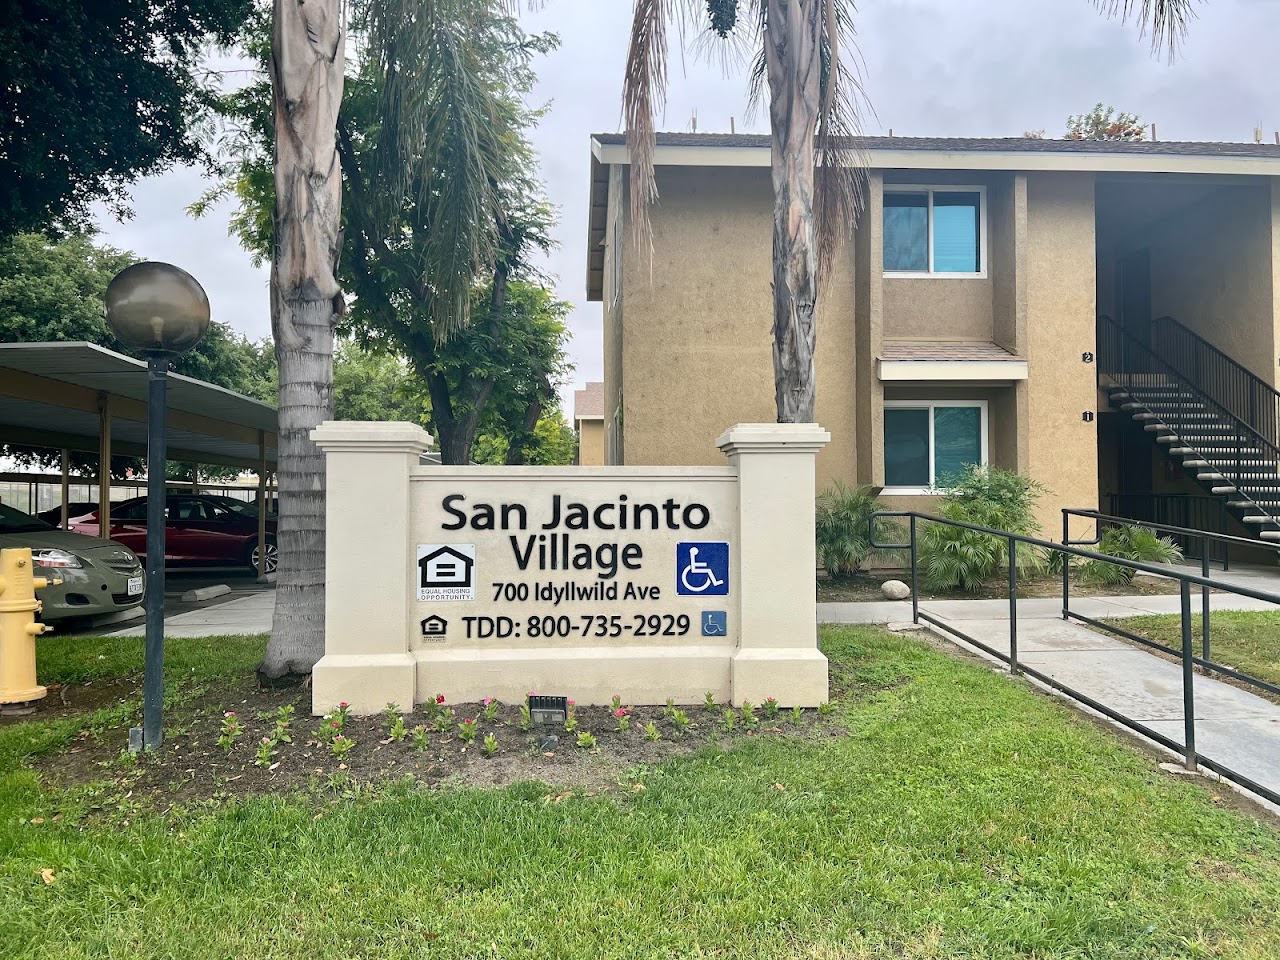 Photo of SAN JACINTO VILLAGE APARTMENTS. Affordable housing located at 700 IDYLLWILD DRIVE SAN JACINTO, CA 92583